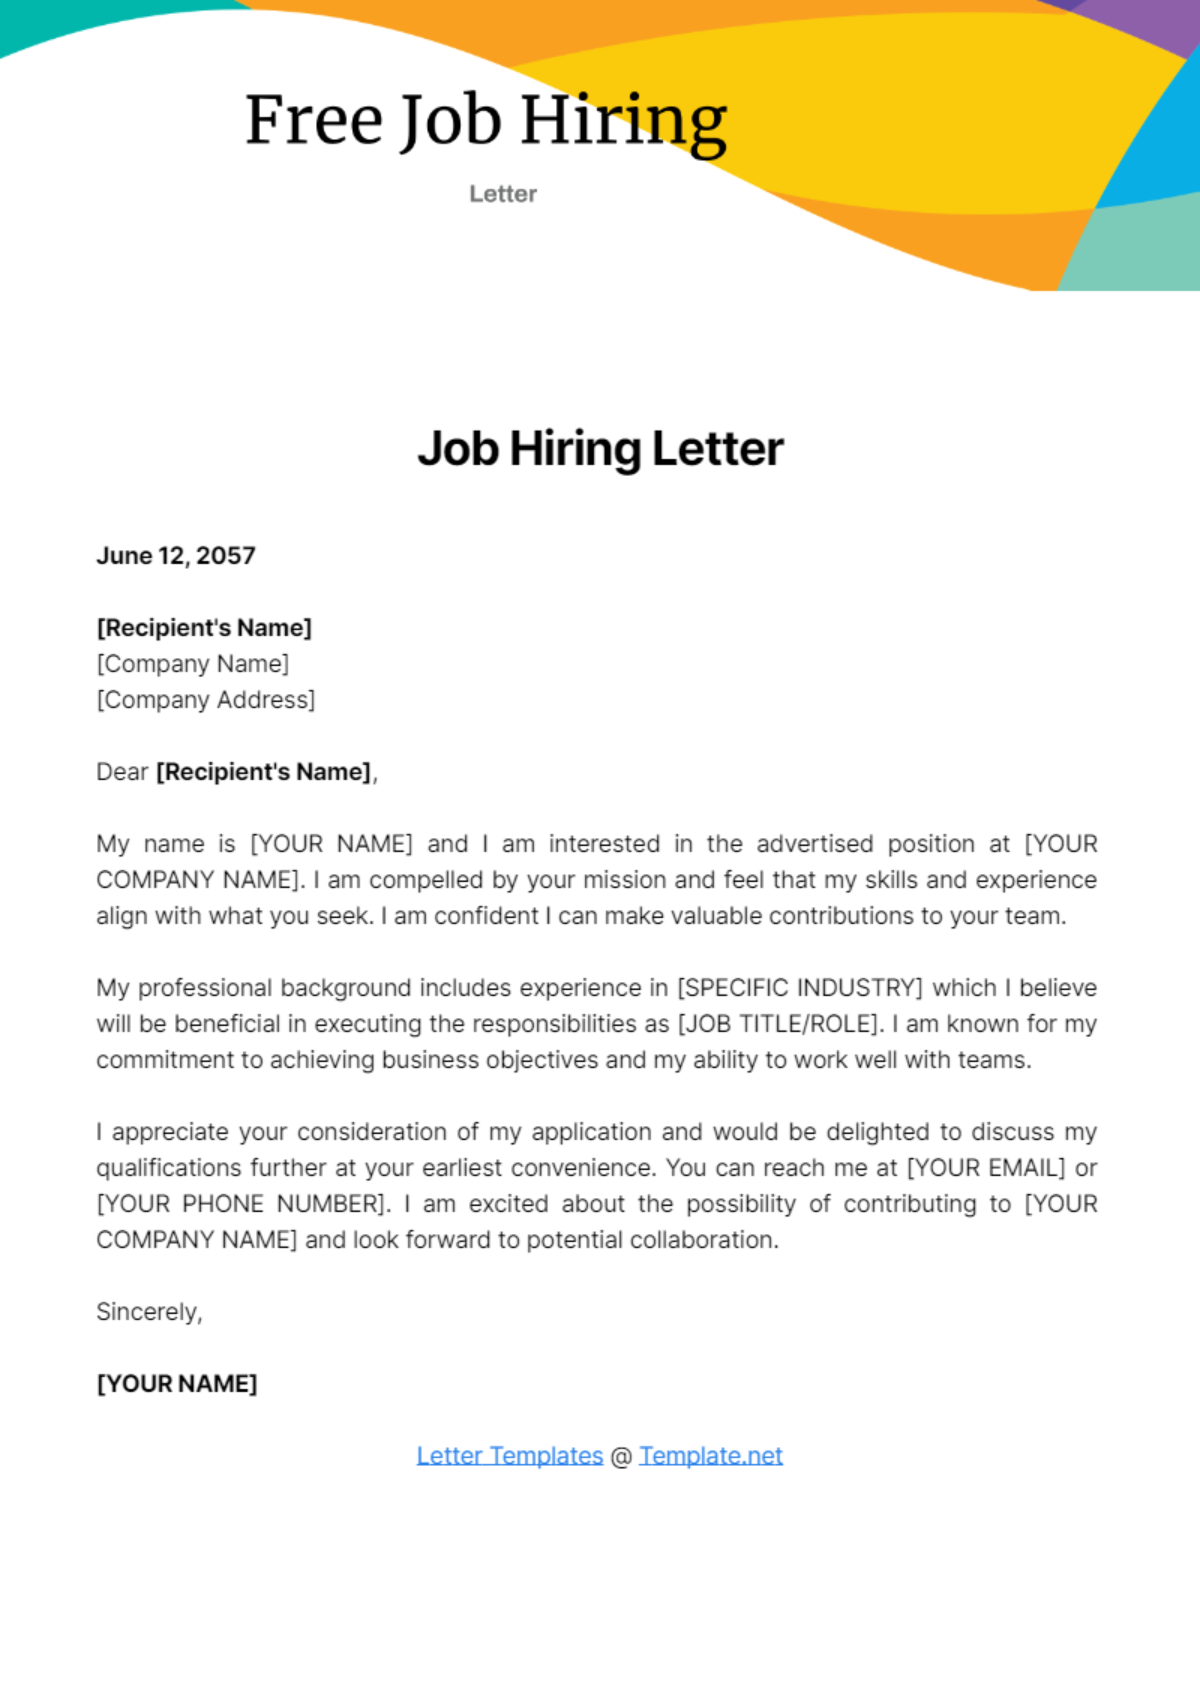 Job Hiring Letter Template